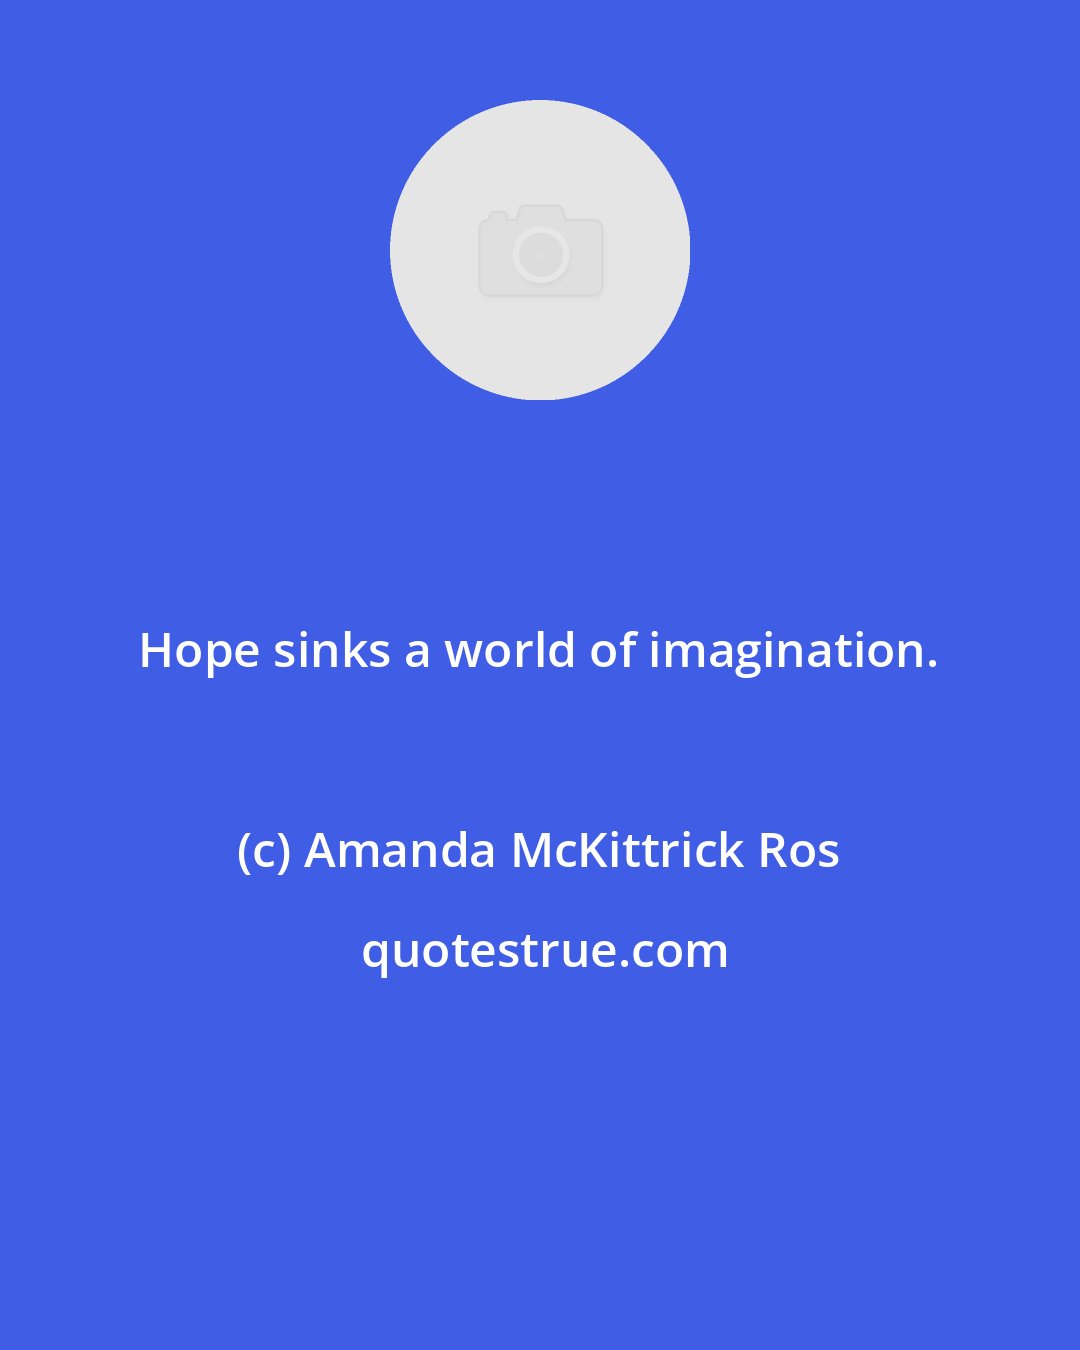 Amanda McKittrick Ros: Hope sinks a world of imagination.